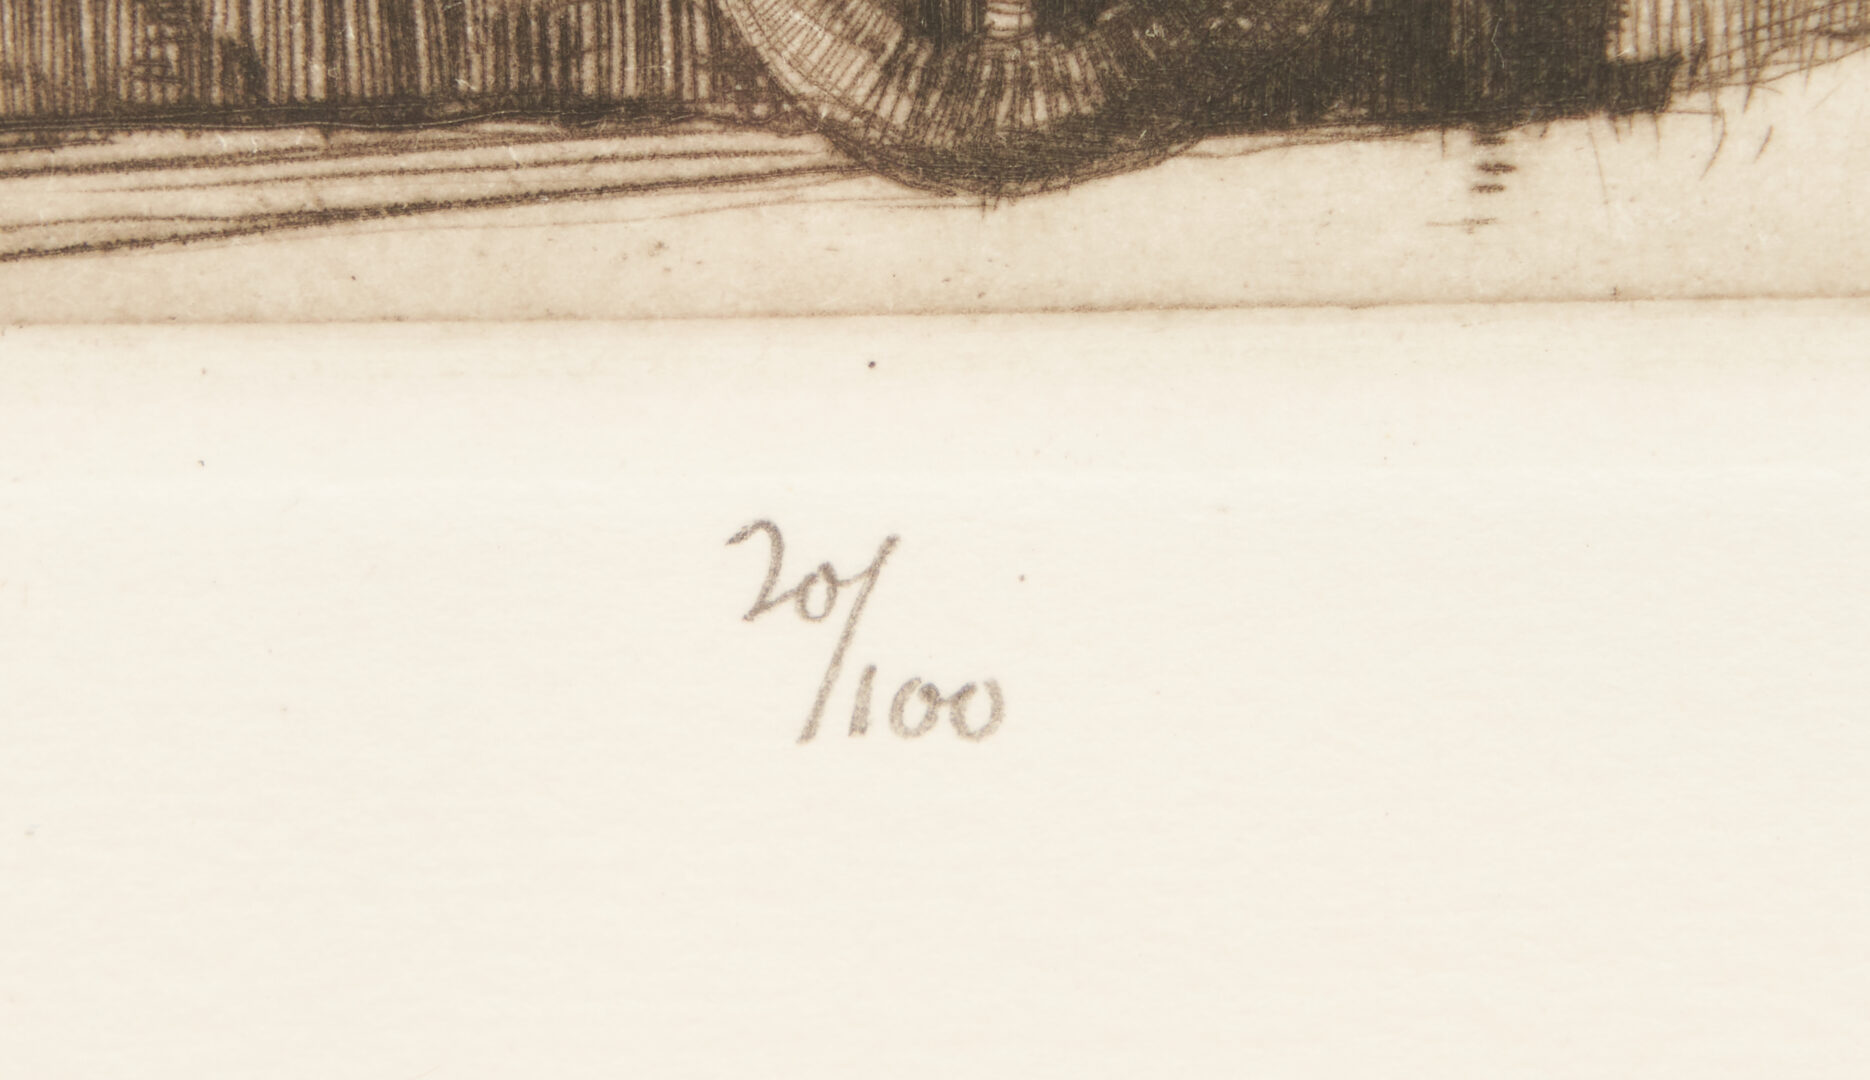 Lot 727: 5 Prints, incl. Samuel V. Chamberlain, Davis Gray, Captain James Cook